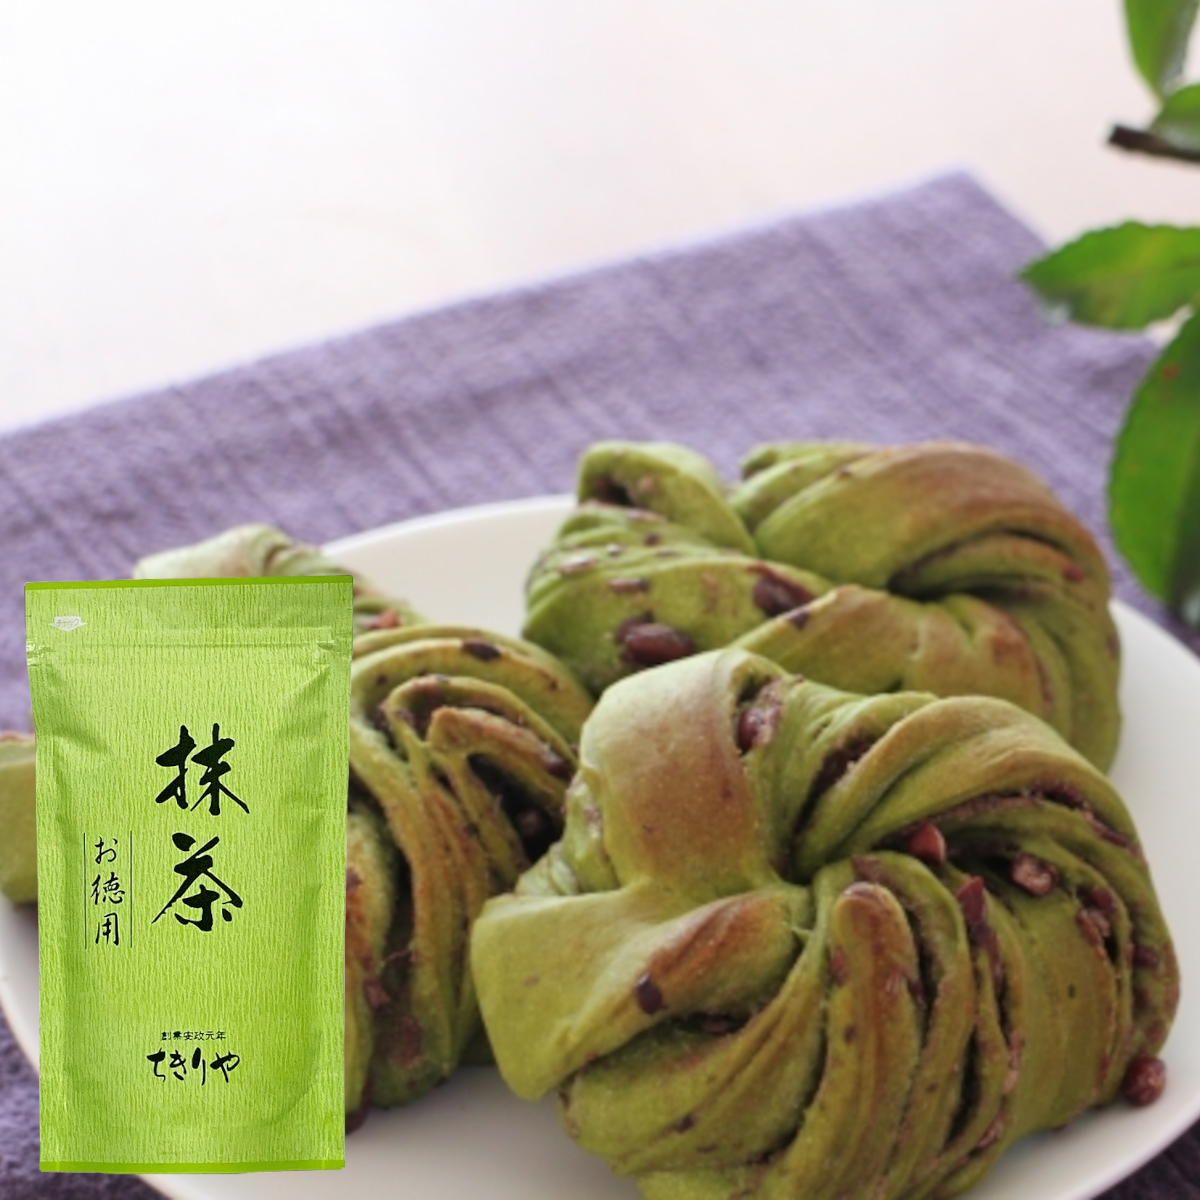 Kyoto-Uji Matcha - 150g green tea powder